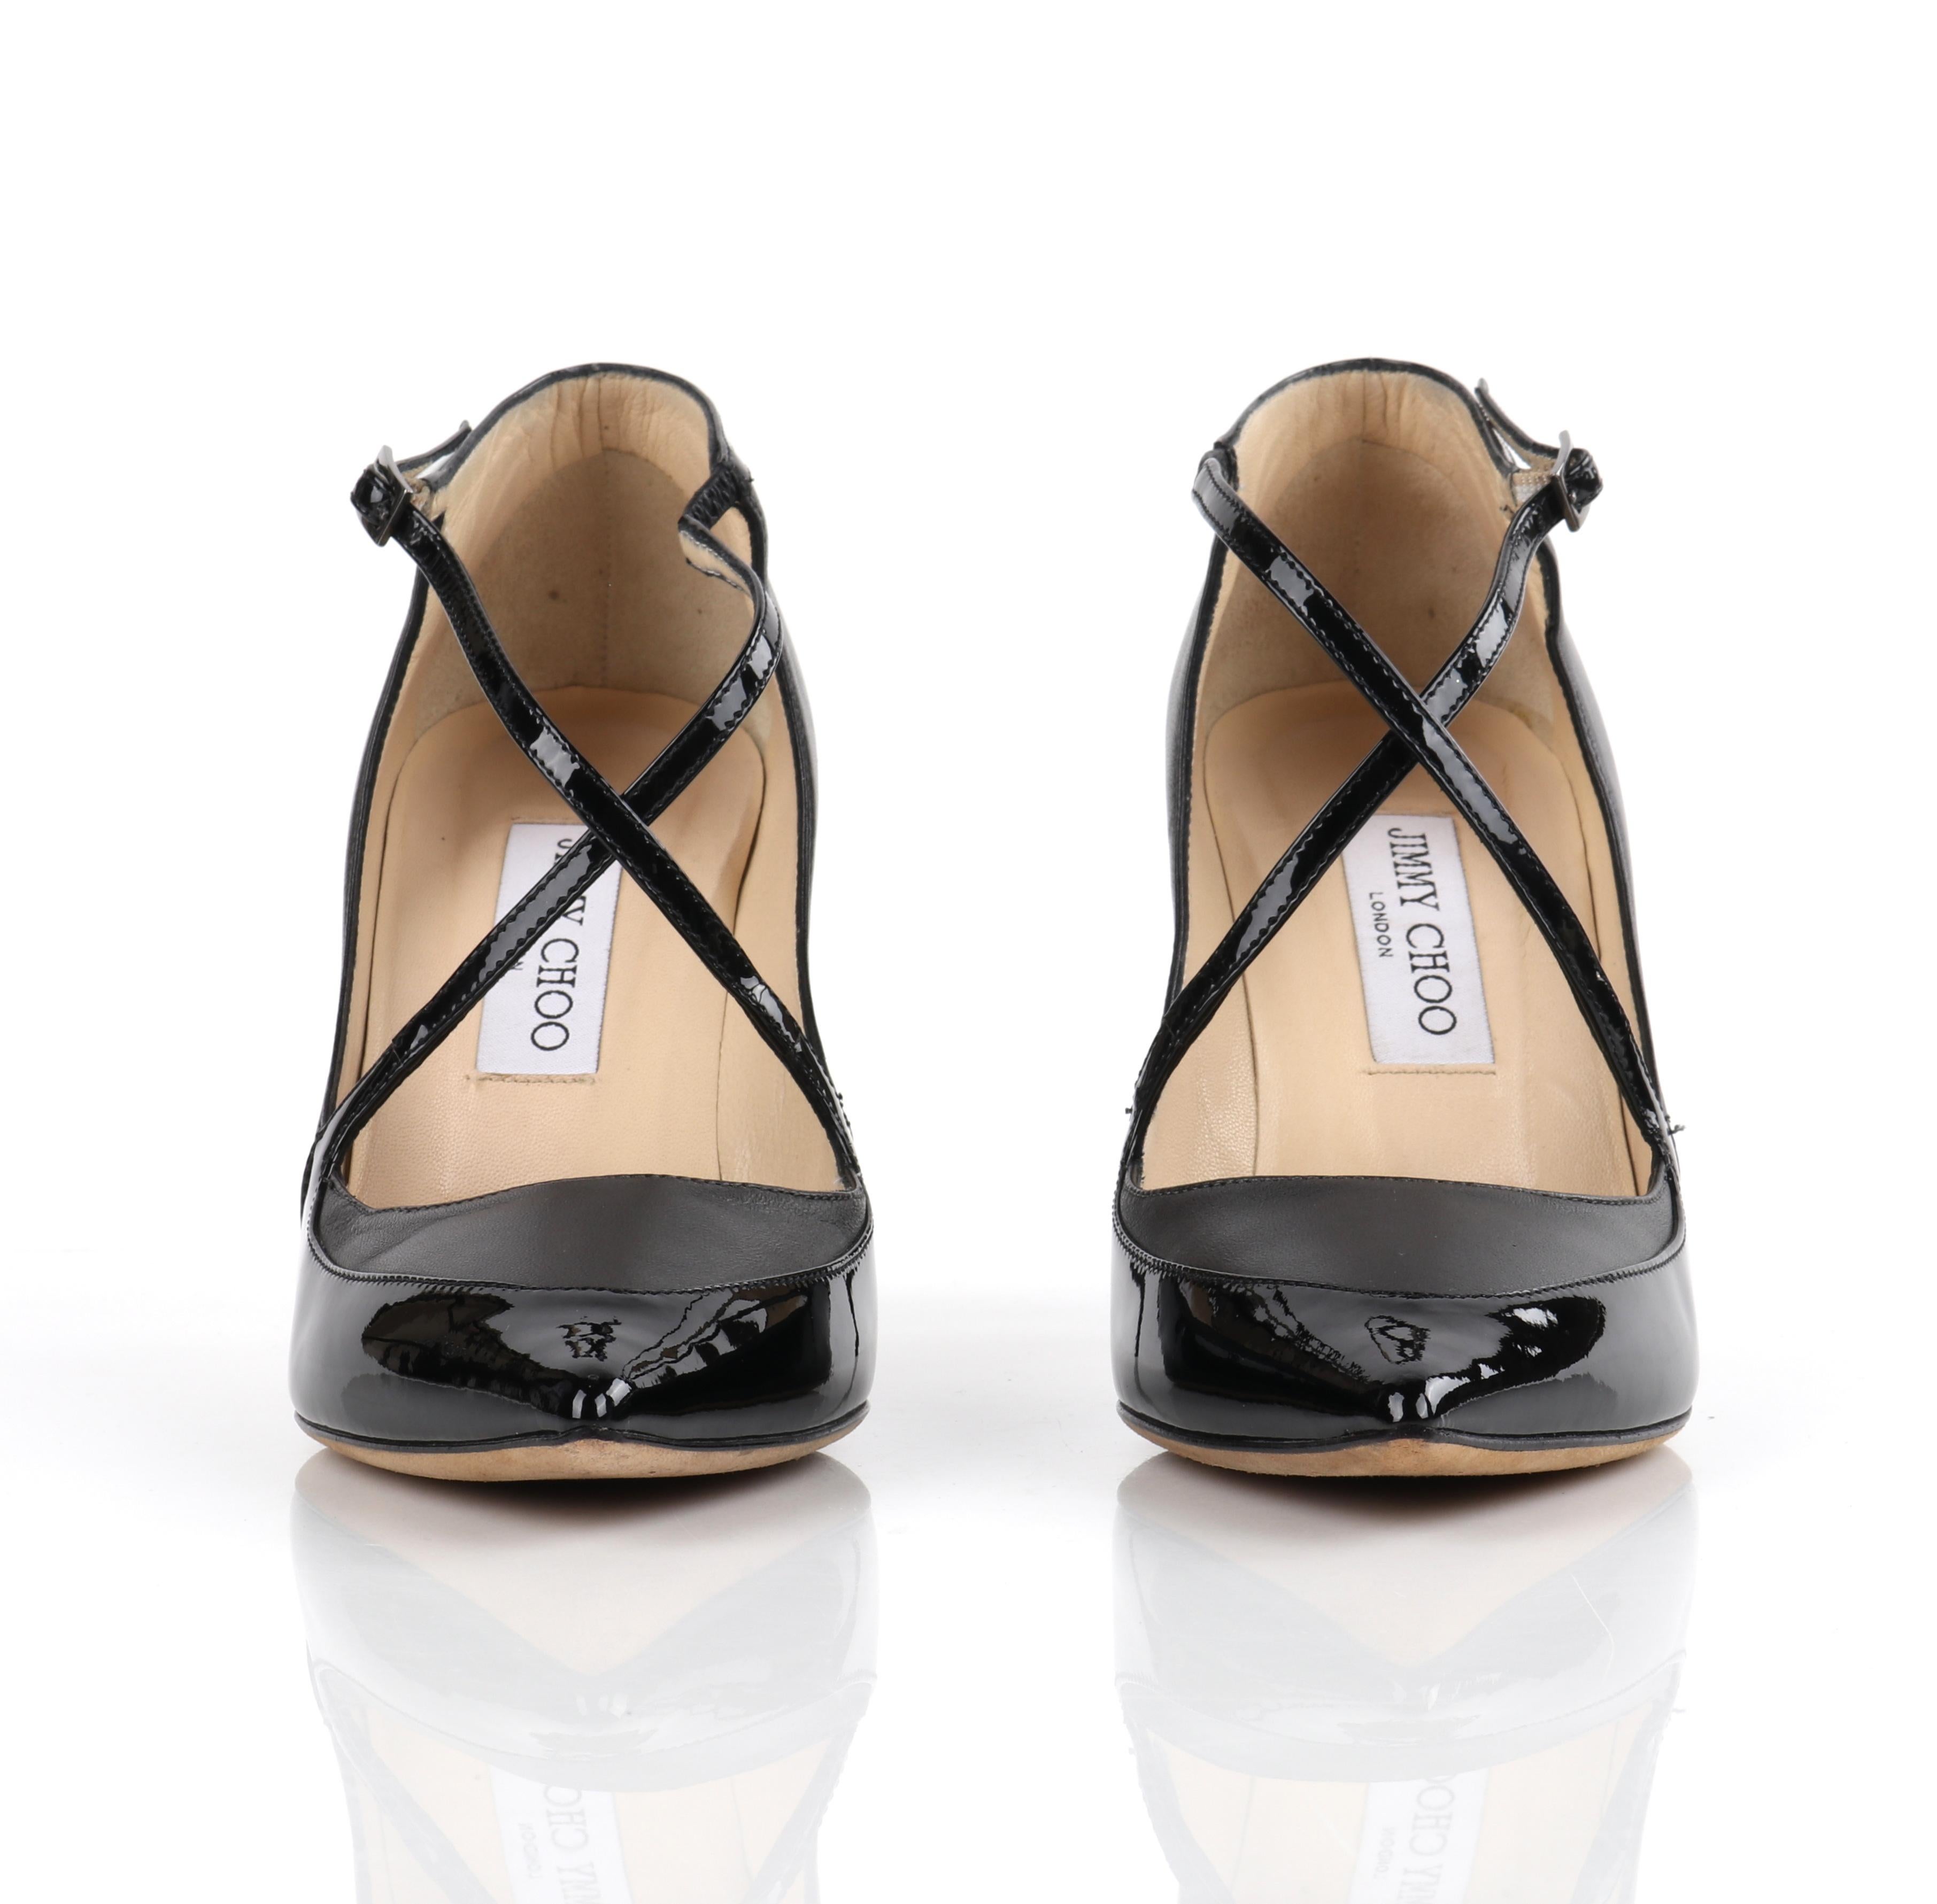 Women's JIMMY CHOO “Madera” Gray Black Leather Criss Cross Strap Pointed Toe Pump Heels